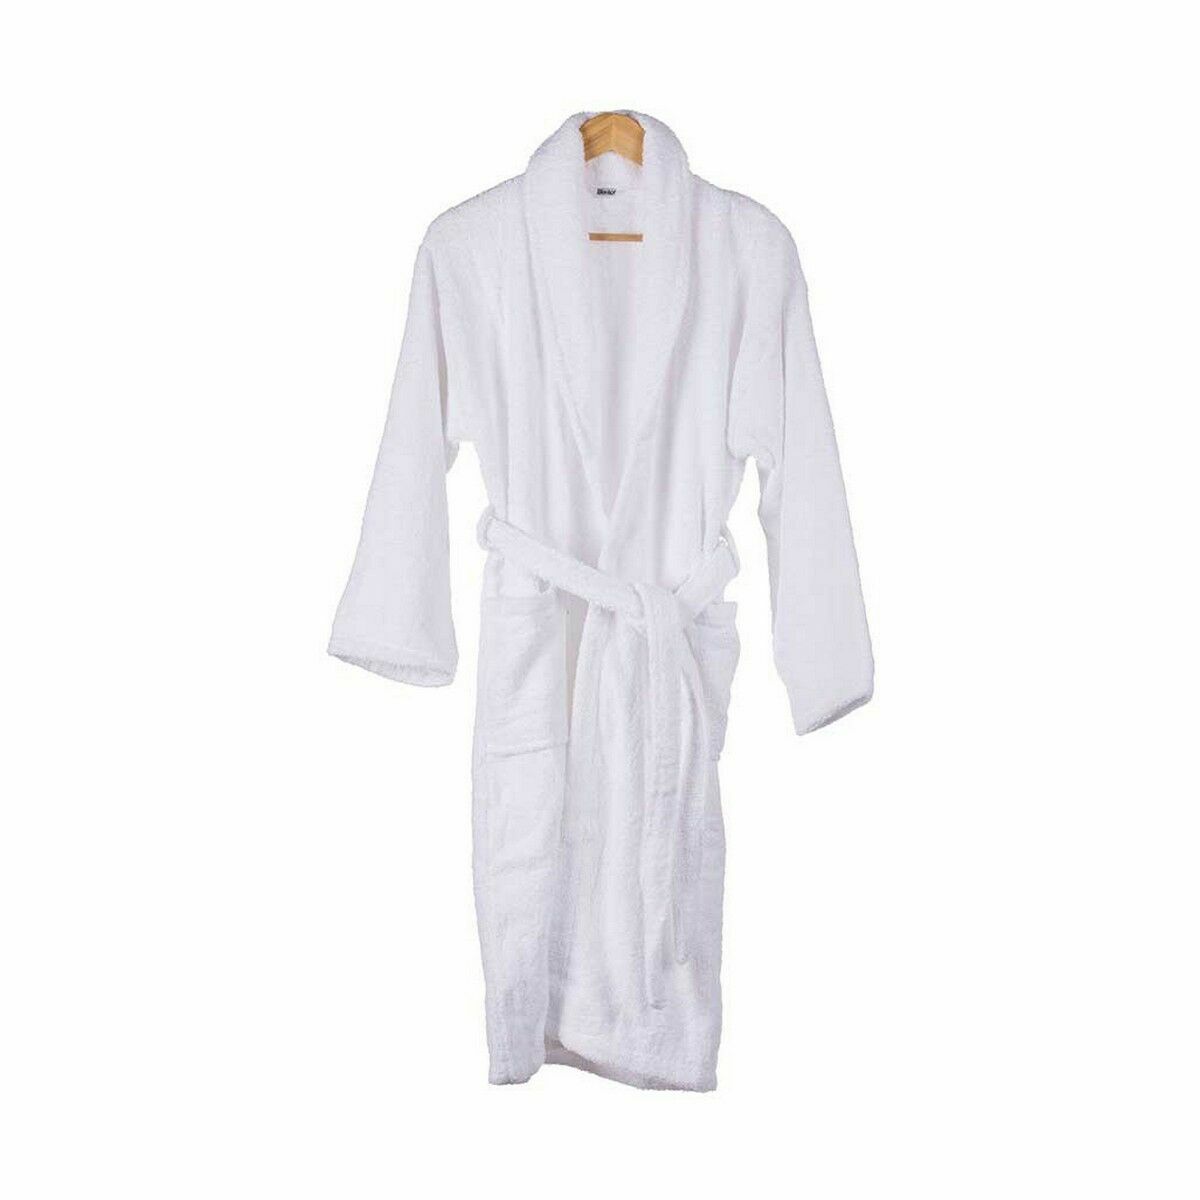 Dressing Gown M/L White (6 Units)